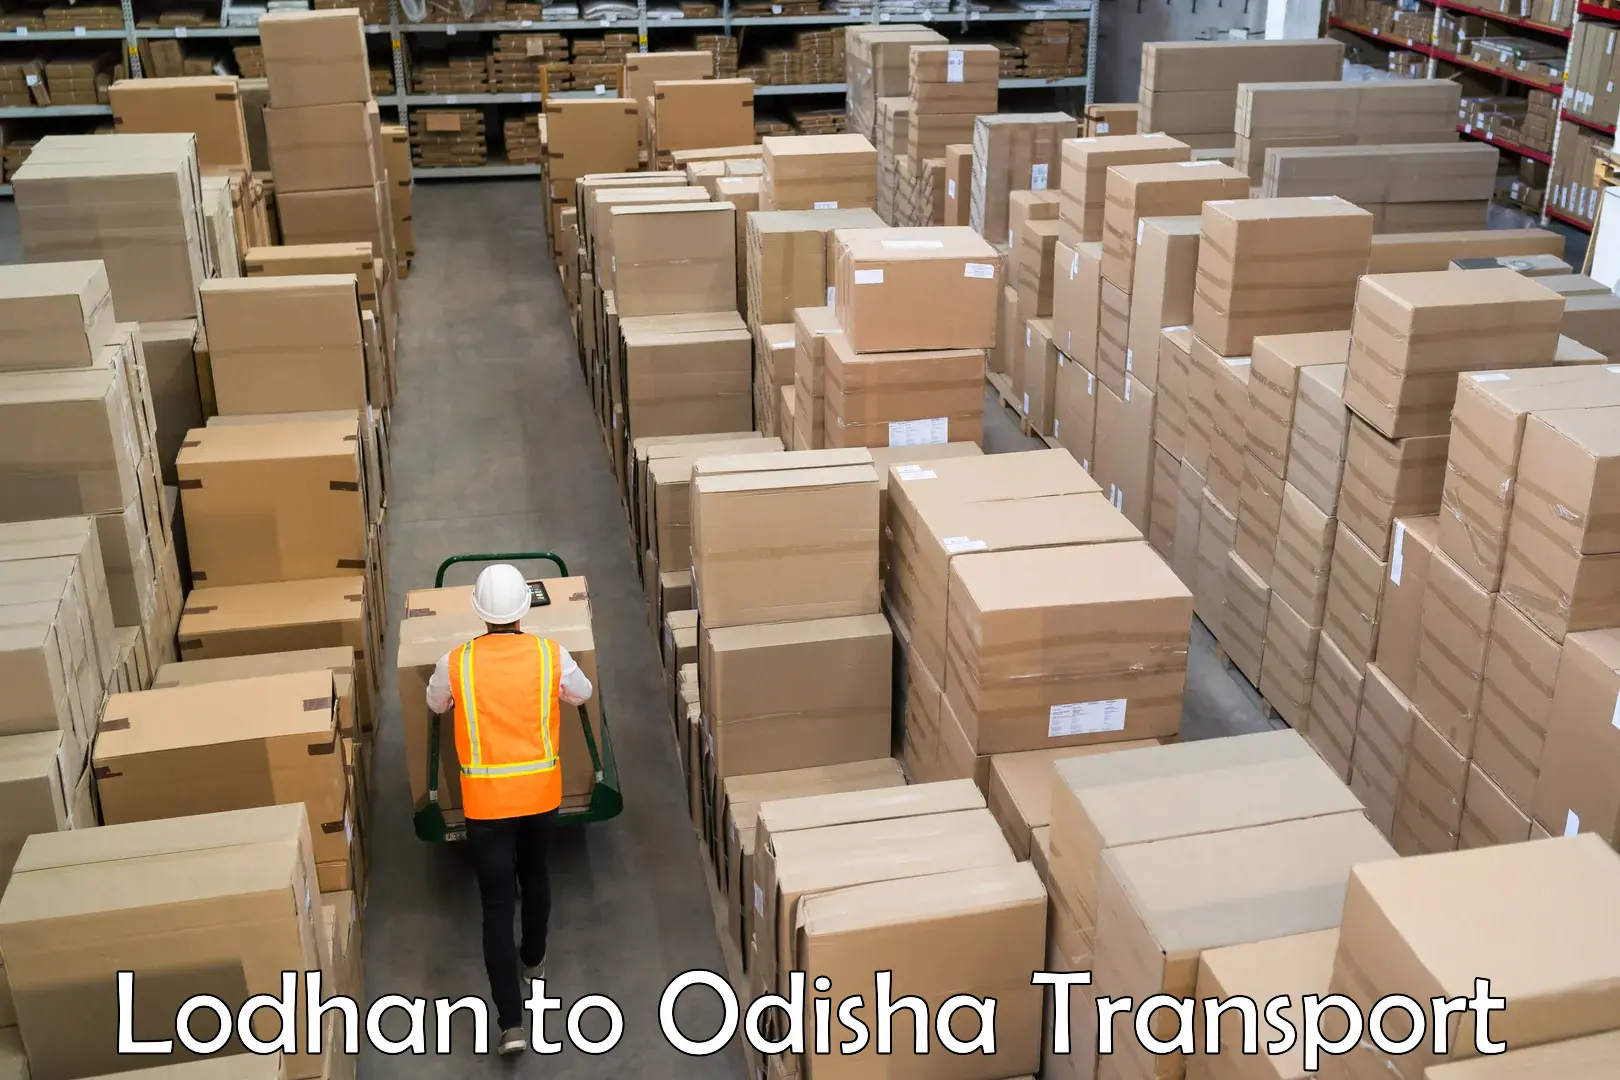 Cargo train transport services in Lodhan to Raruan